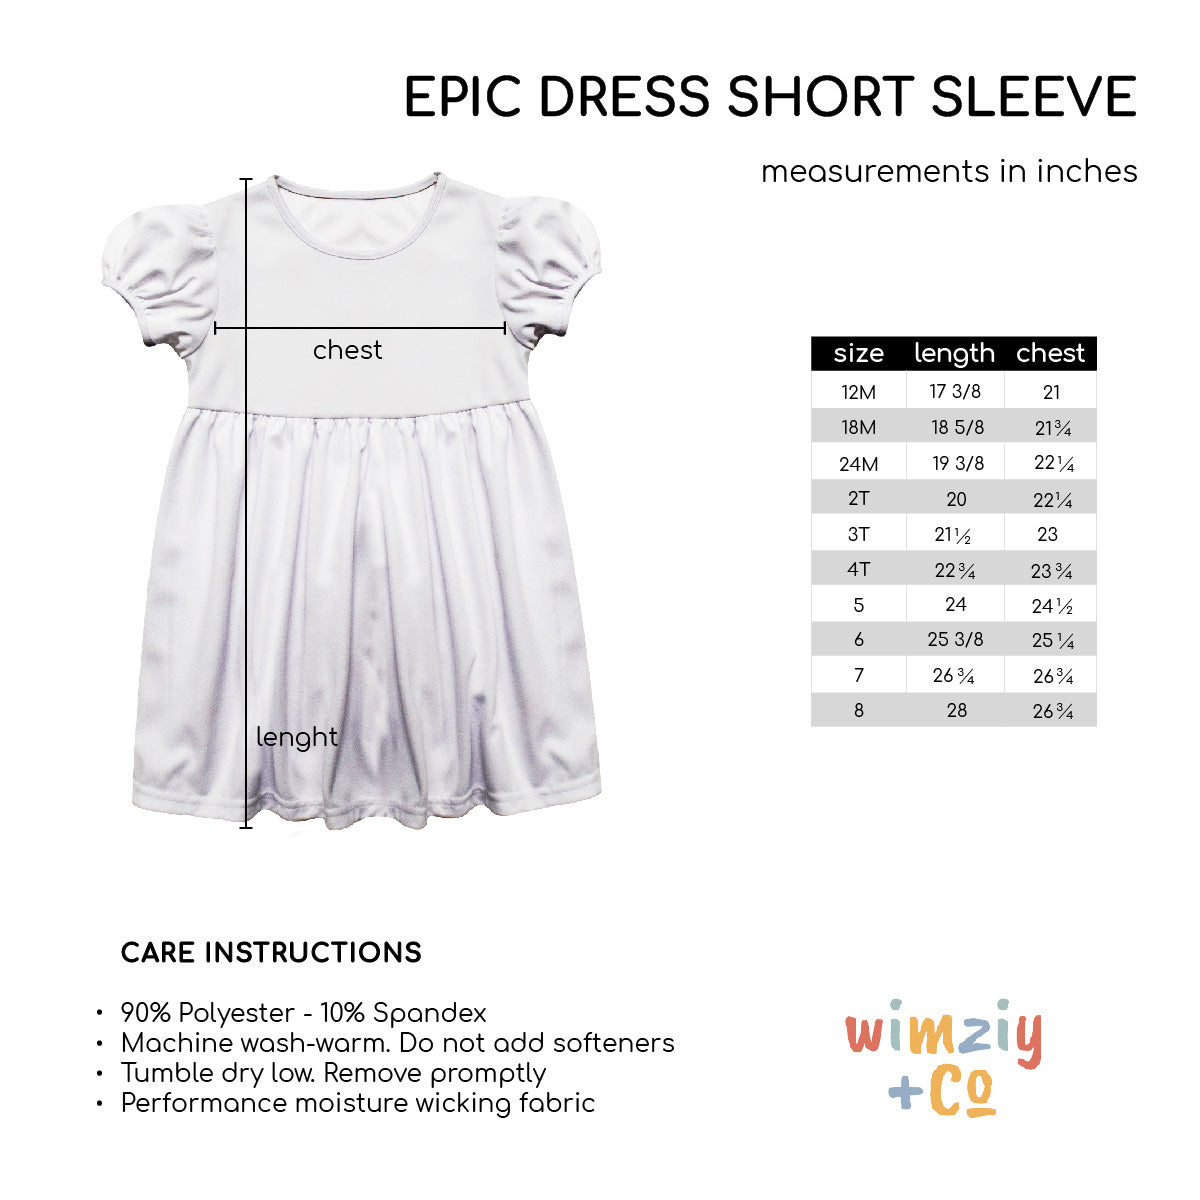 Rainbow Print Personalized Monogram Royal and White Short Sleeve Epic Dress - Wimziy&Co.